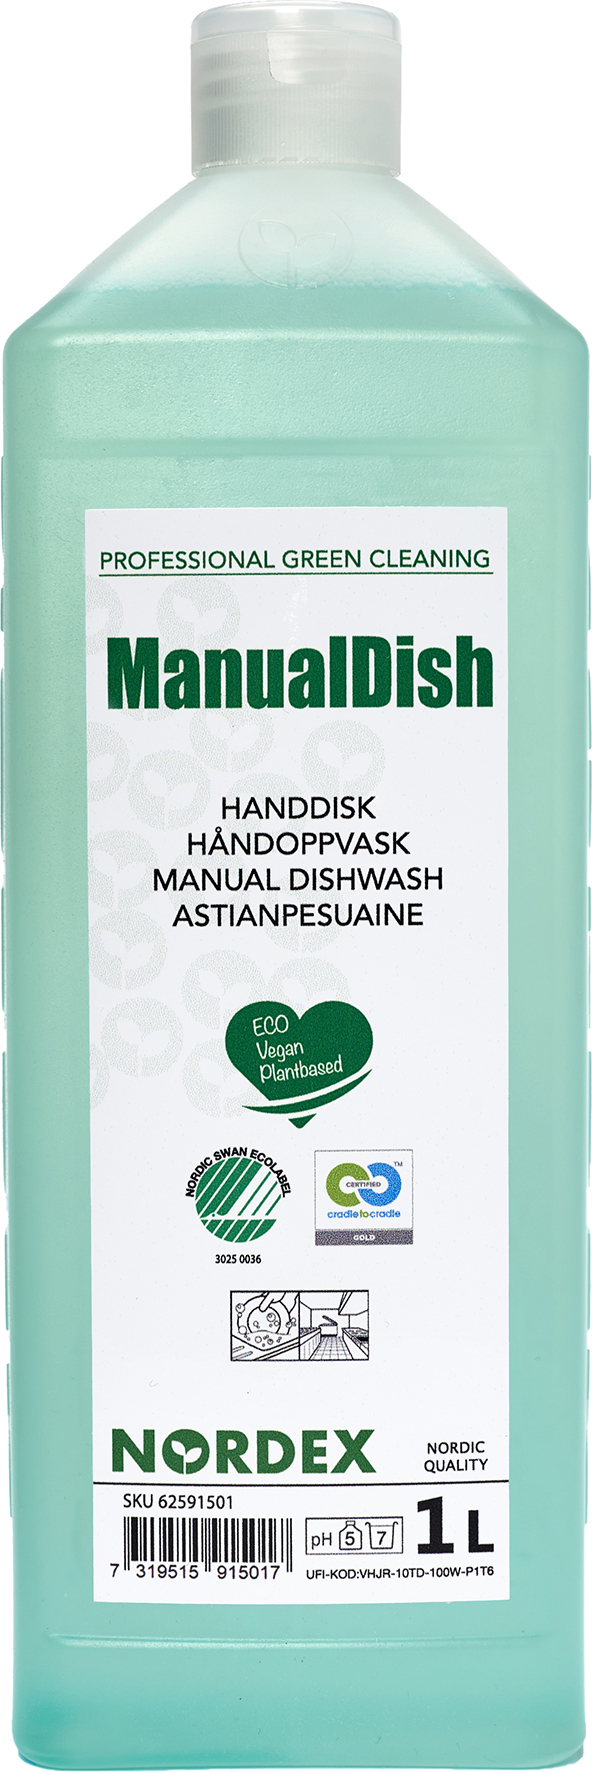 [8556893] ManualDish handdisk, 1 L